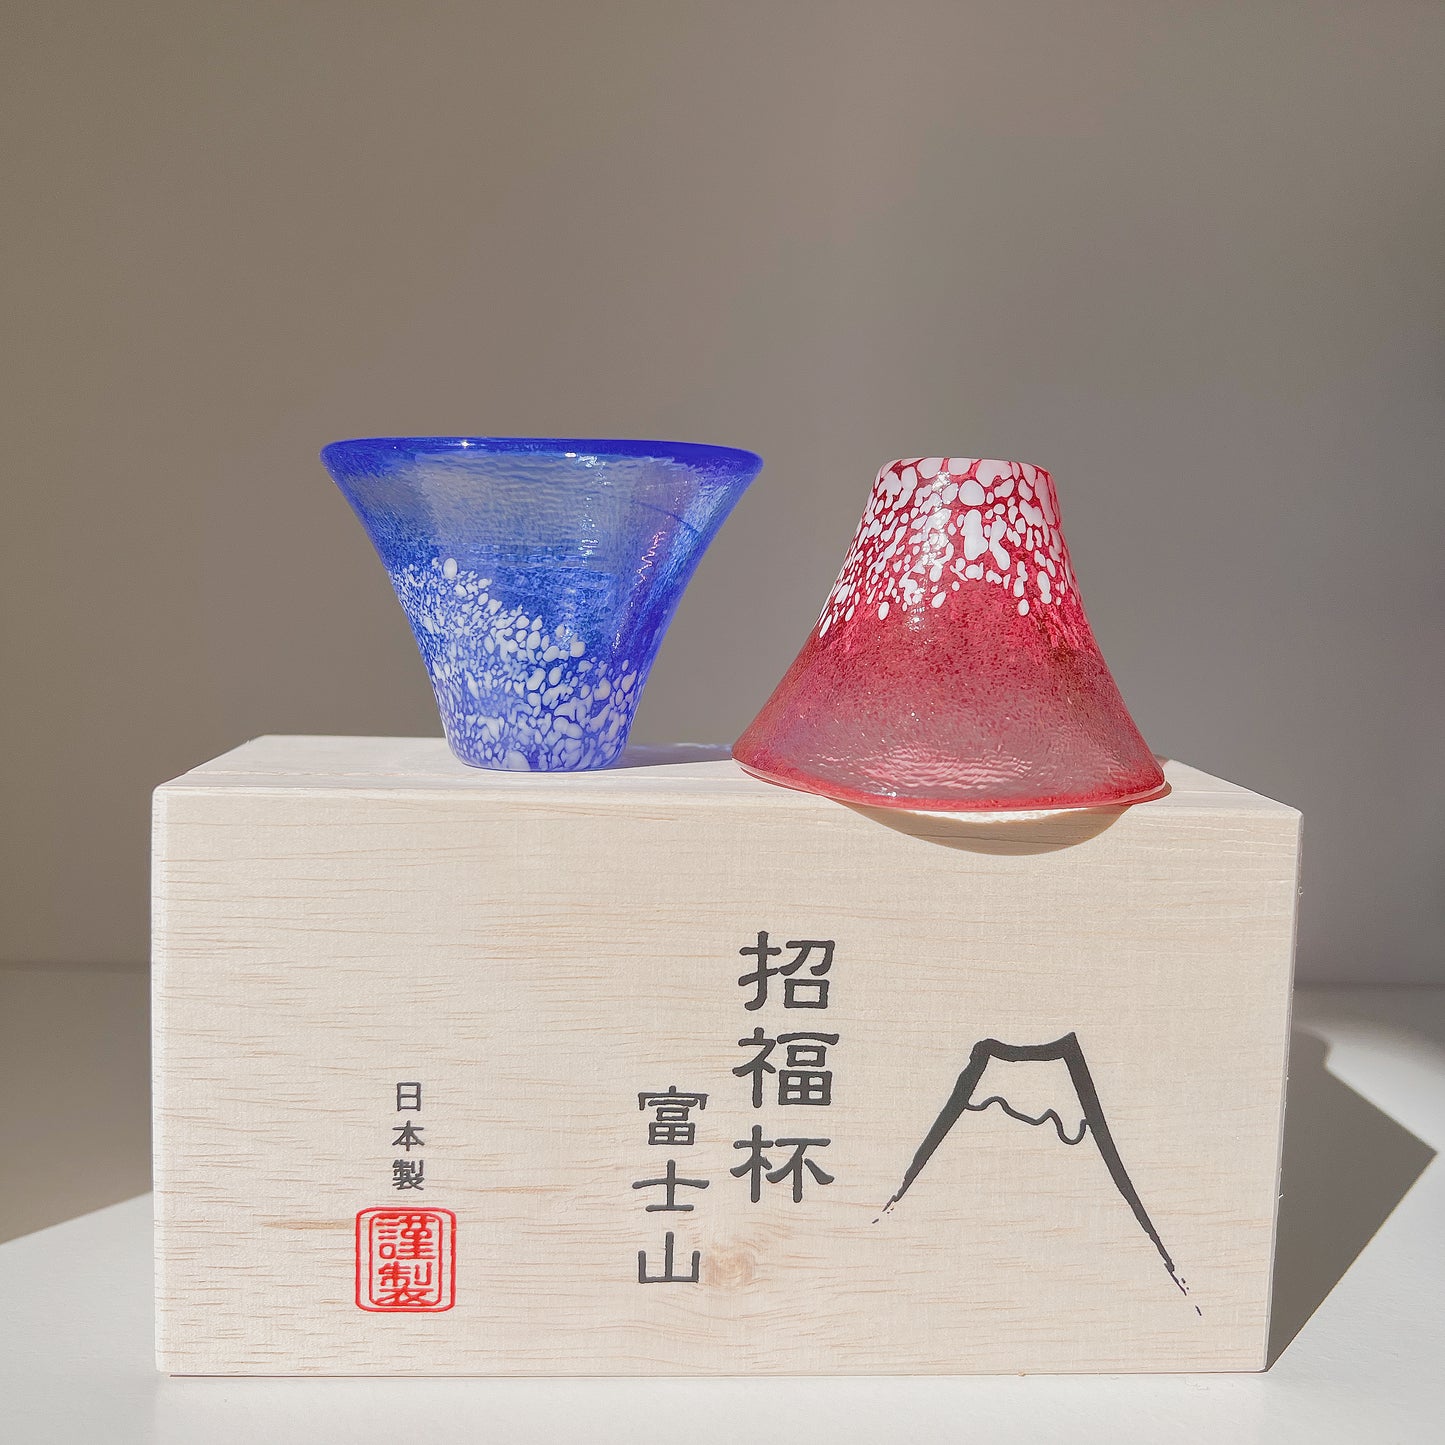 Toyo-sasaki Fuji Yama Sake Cup sets (incl. gift box)